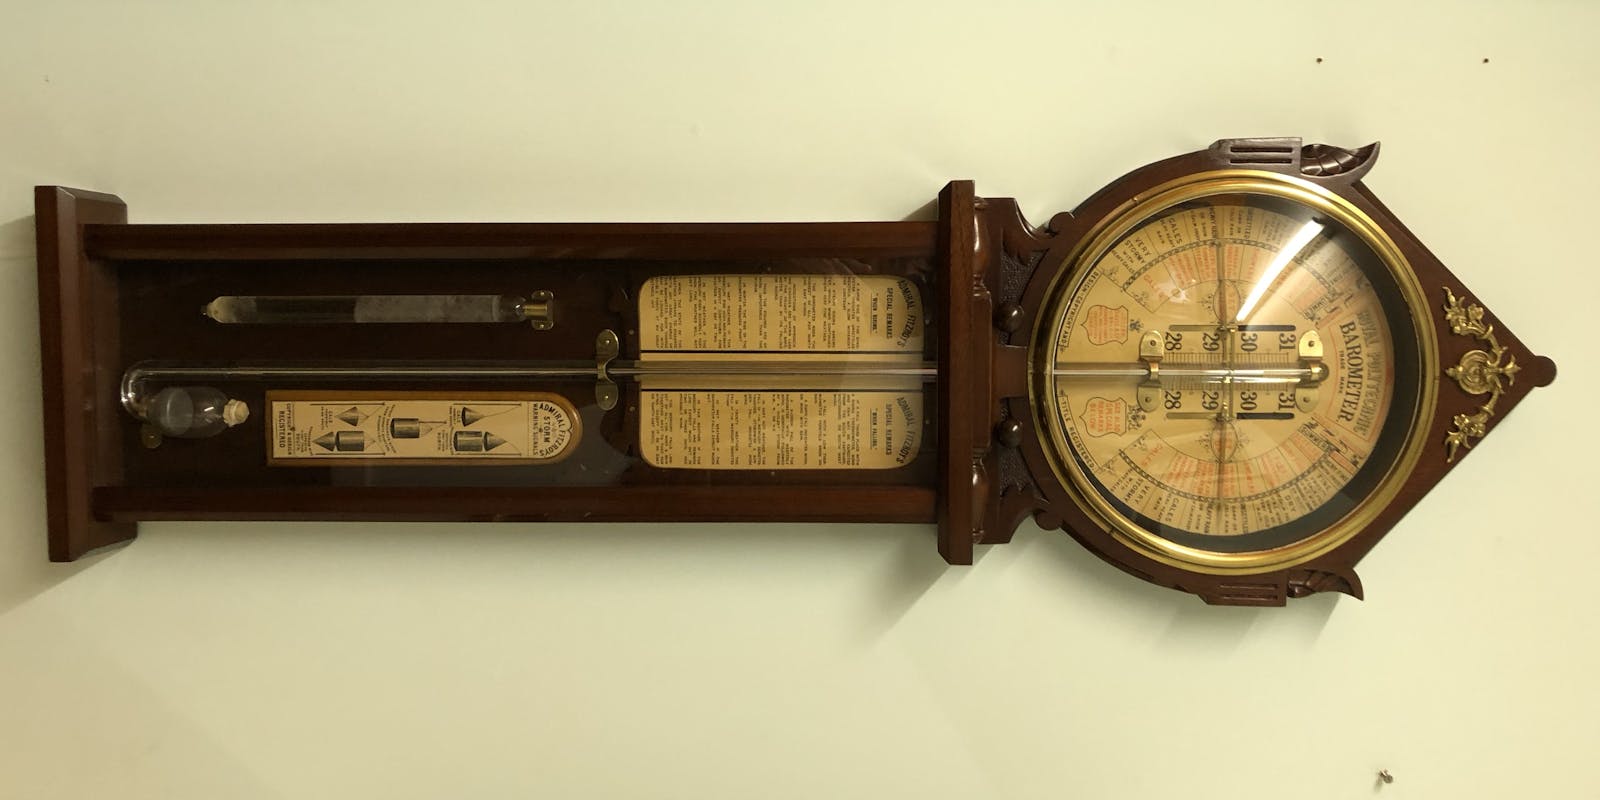 A barometer